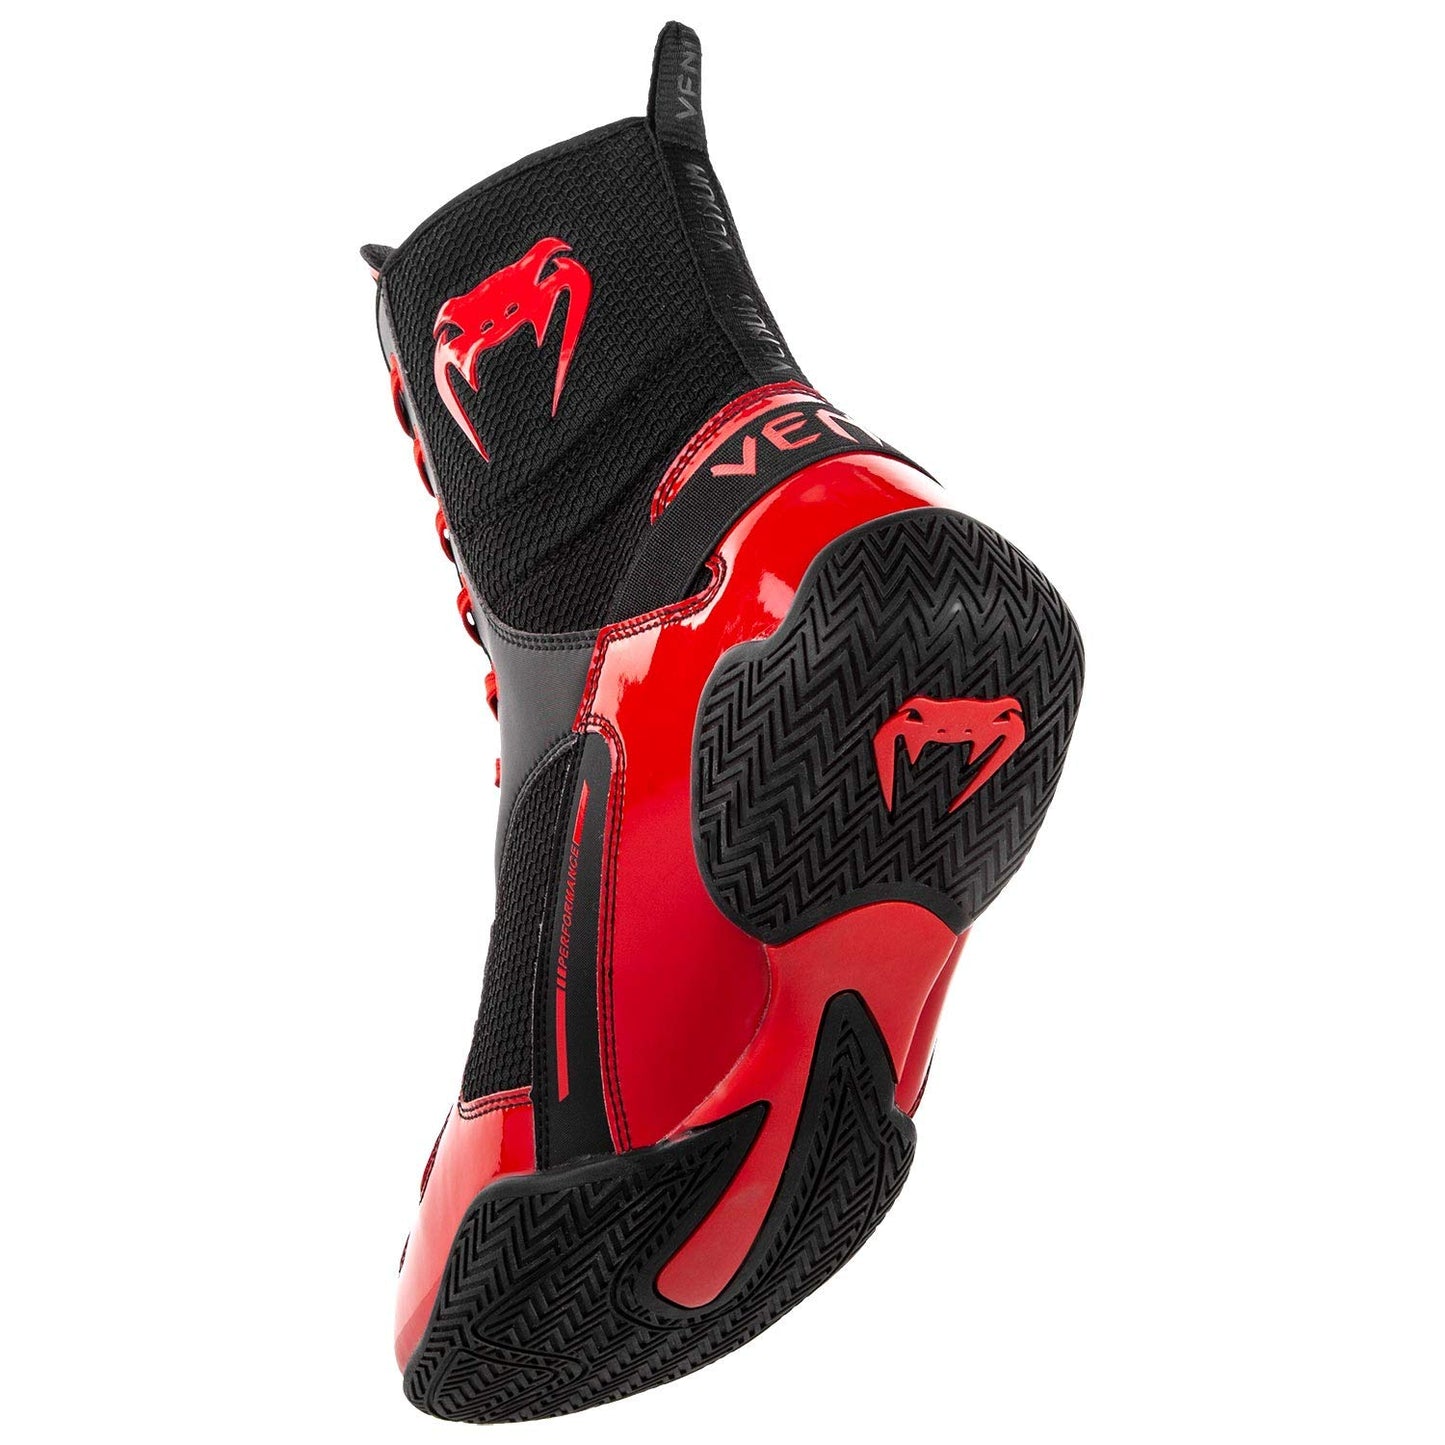 Venum Elite Boxing Shoes - Black/Red - Best Price online Prokicksports.com